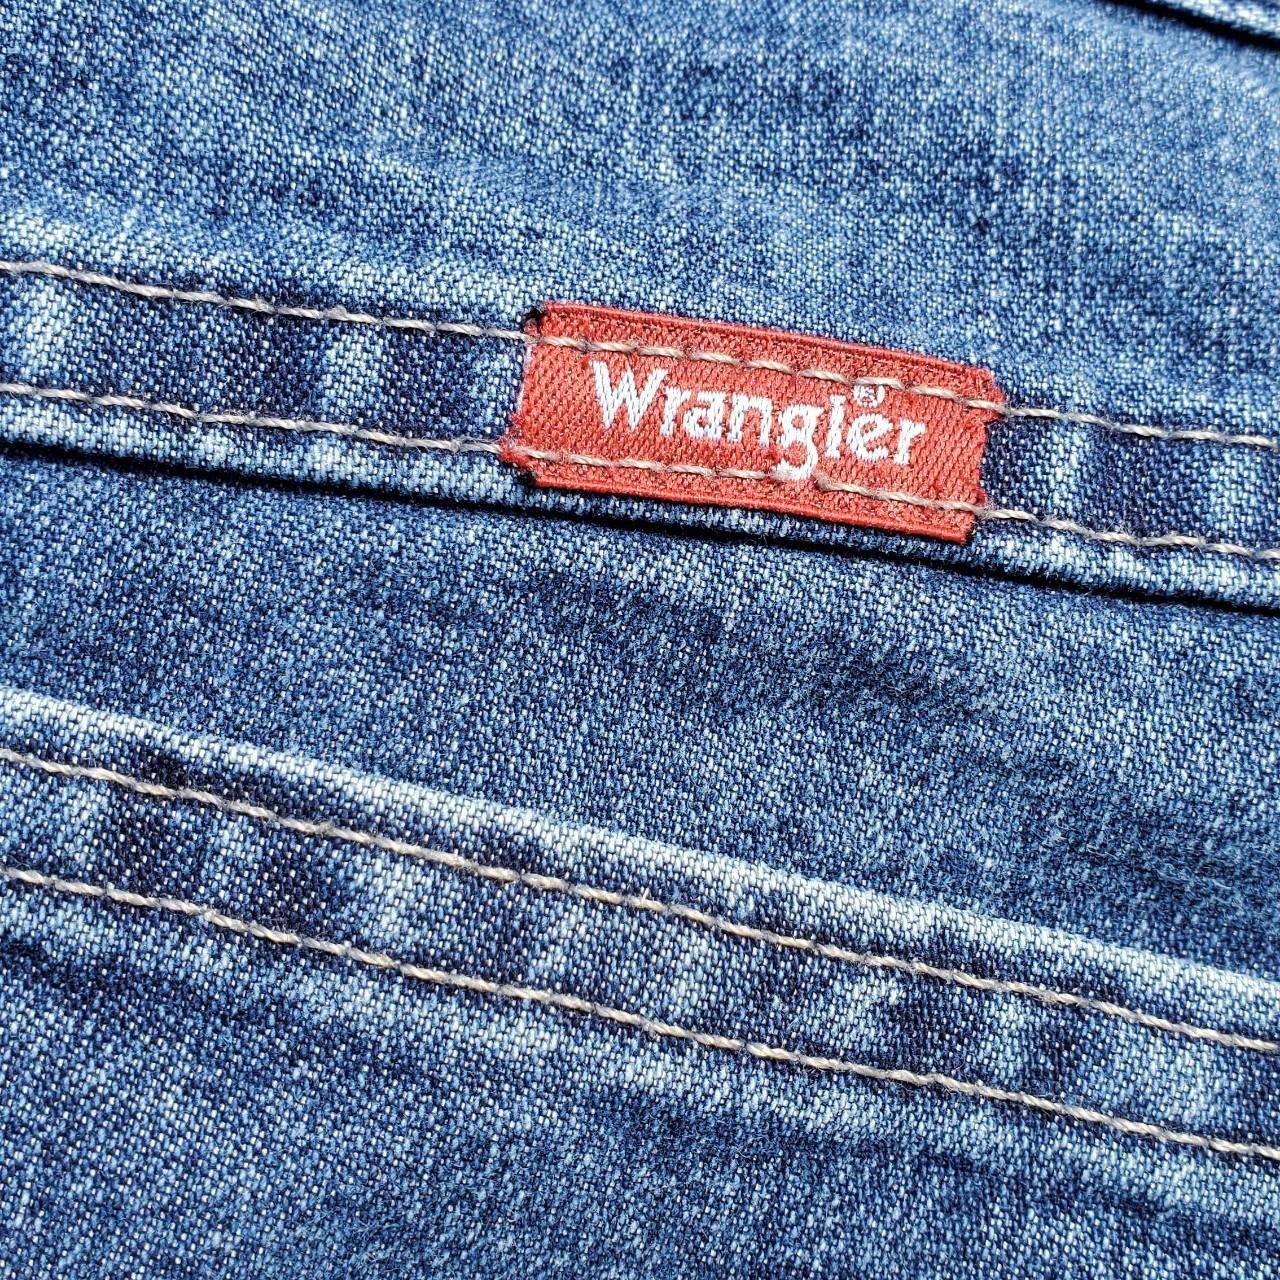 Wrangler Women's Blue Jeans | Depop